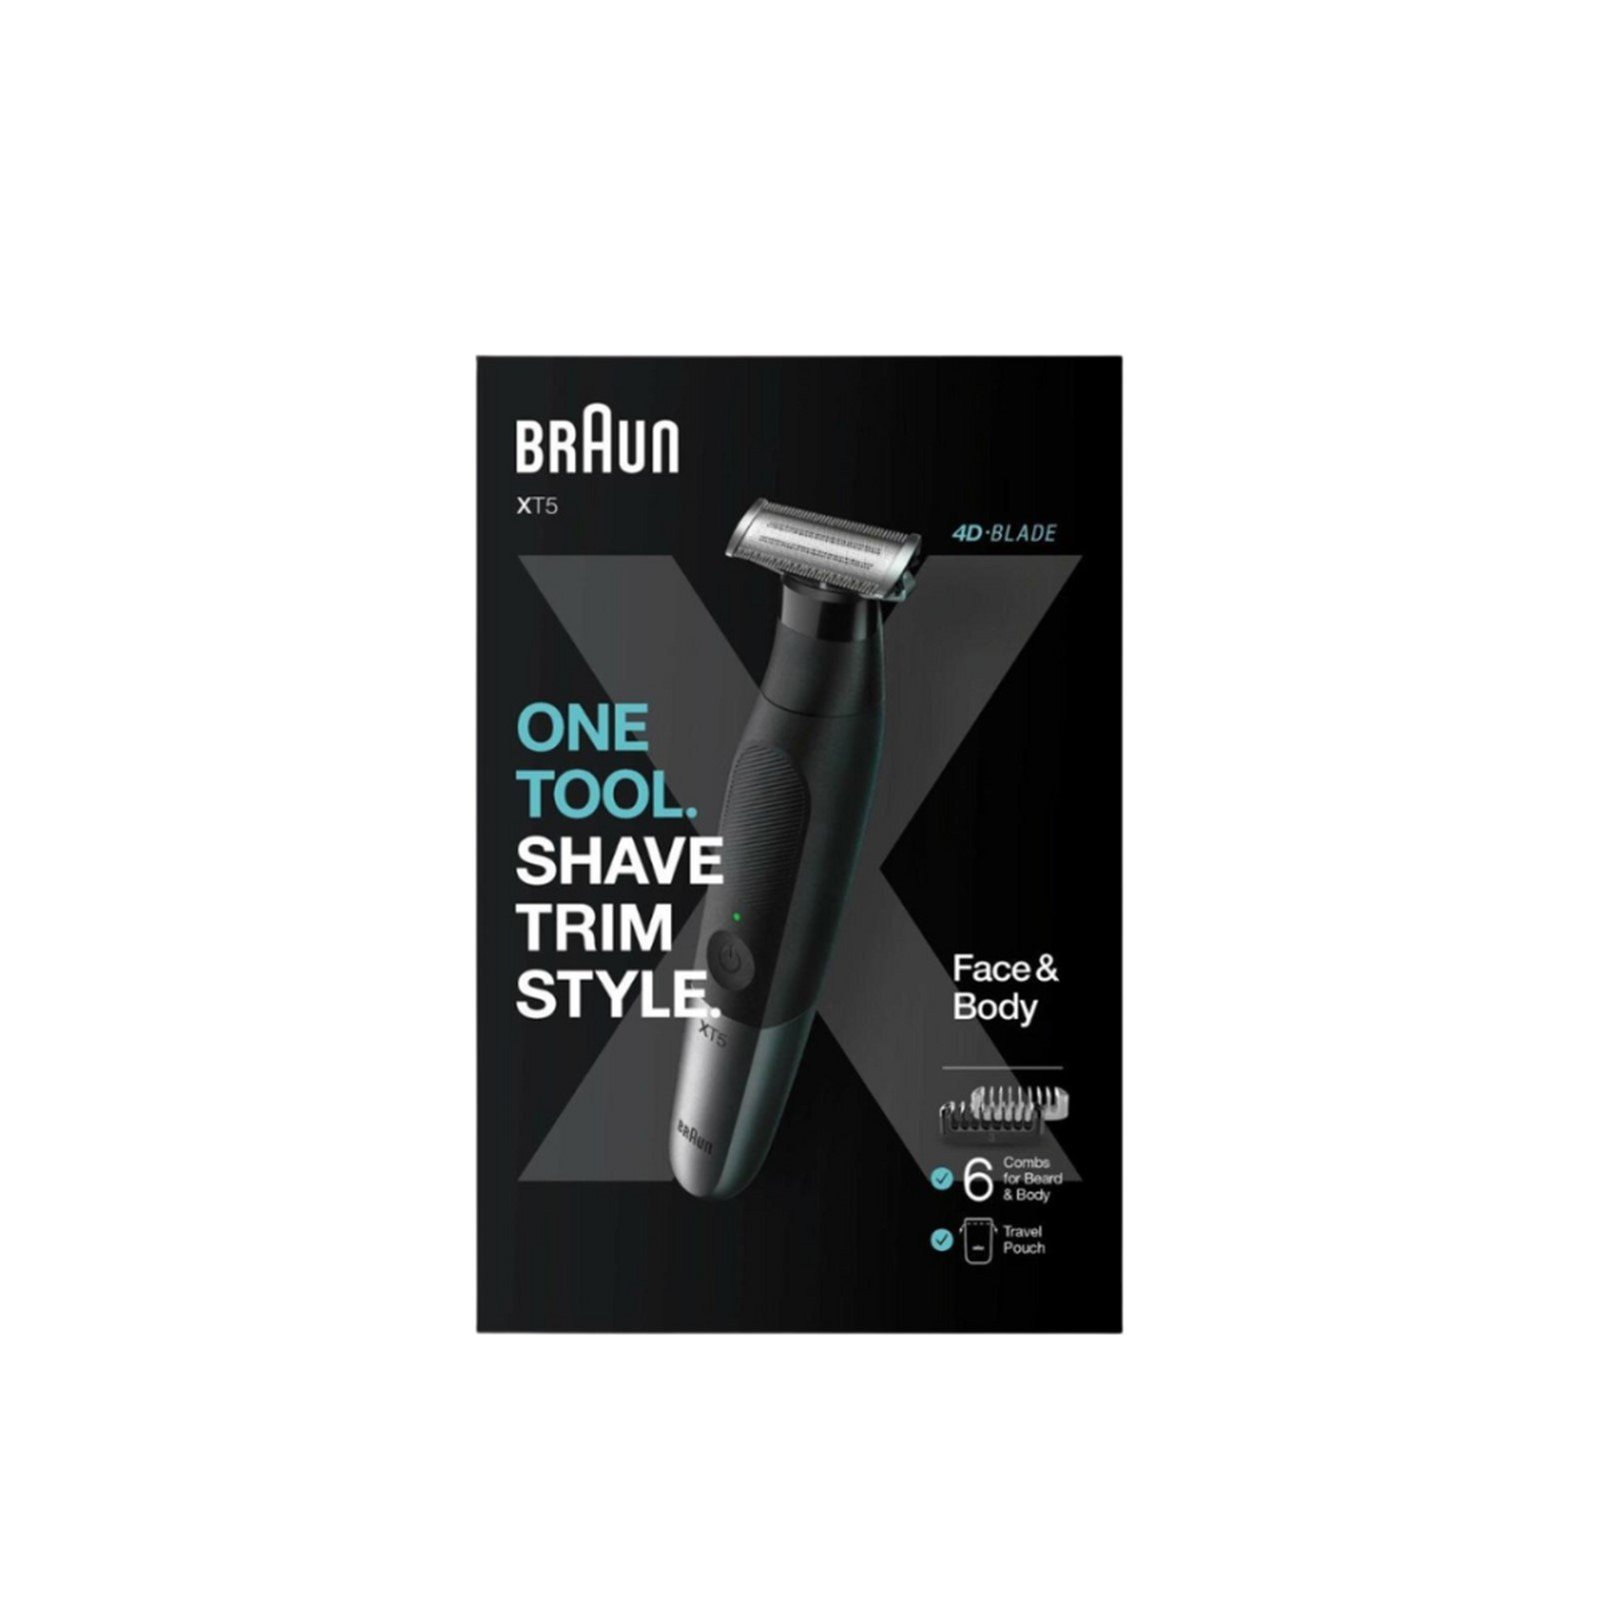 https://static.beautytocare.com/cdn-cgi/image/width=1600,height=1600,f=auto/media/catalog/product//b/r/braun-one-tool-shave-trim-style-face-body-xt5_1.jpg